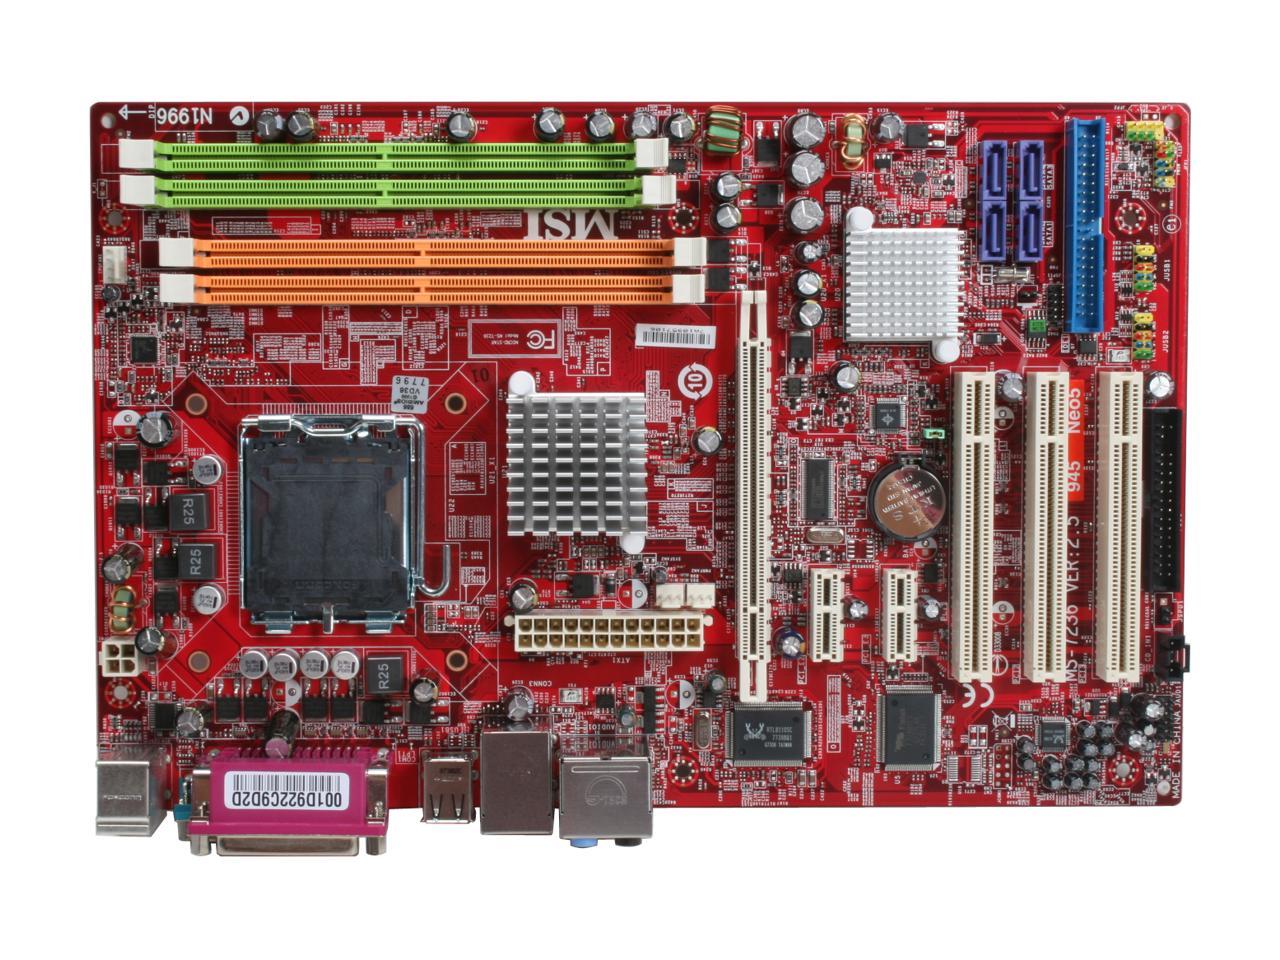 MSI 945 Neo5-F LGA 775 ATX Intel Motherboard - Newegg.com